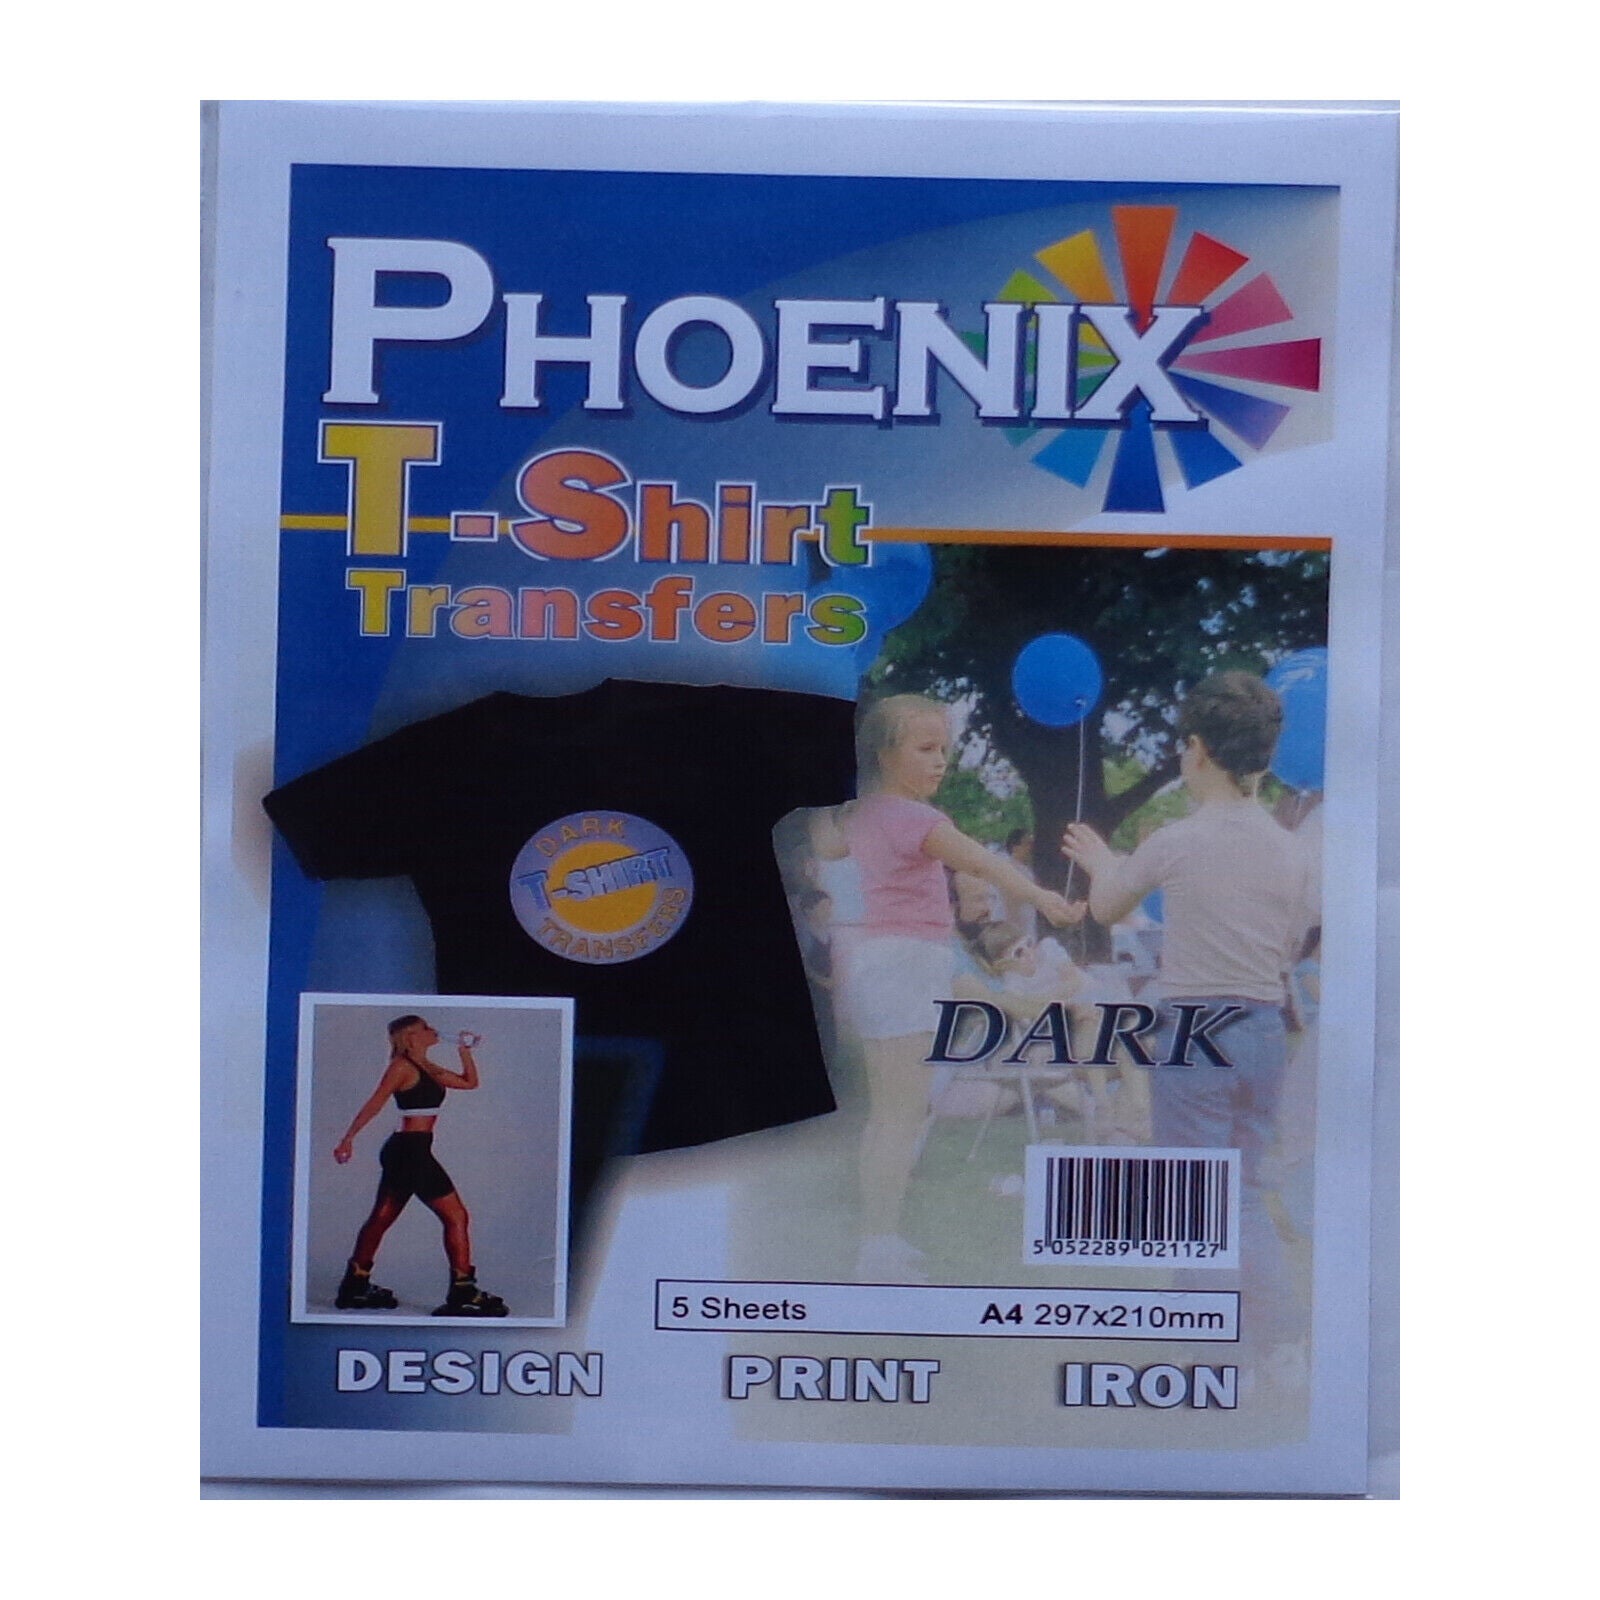 Phoenix T-Shirt Transfer Paper A4 - Dark 5 Sheets